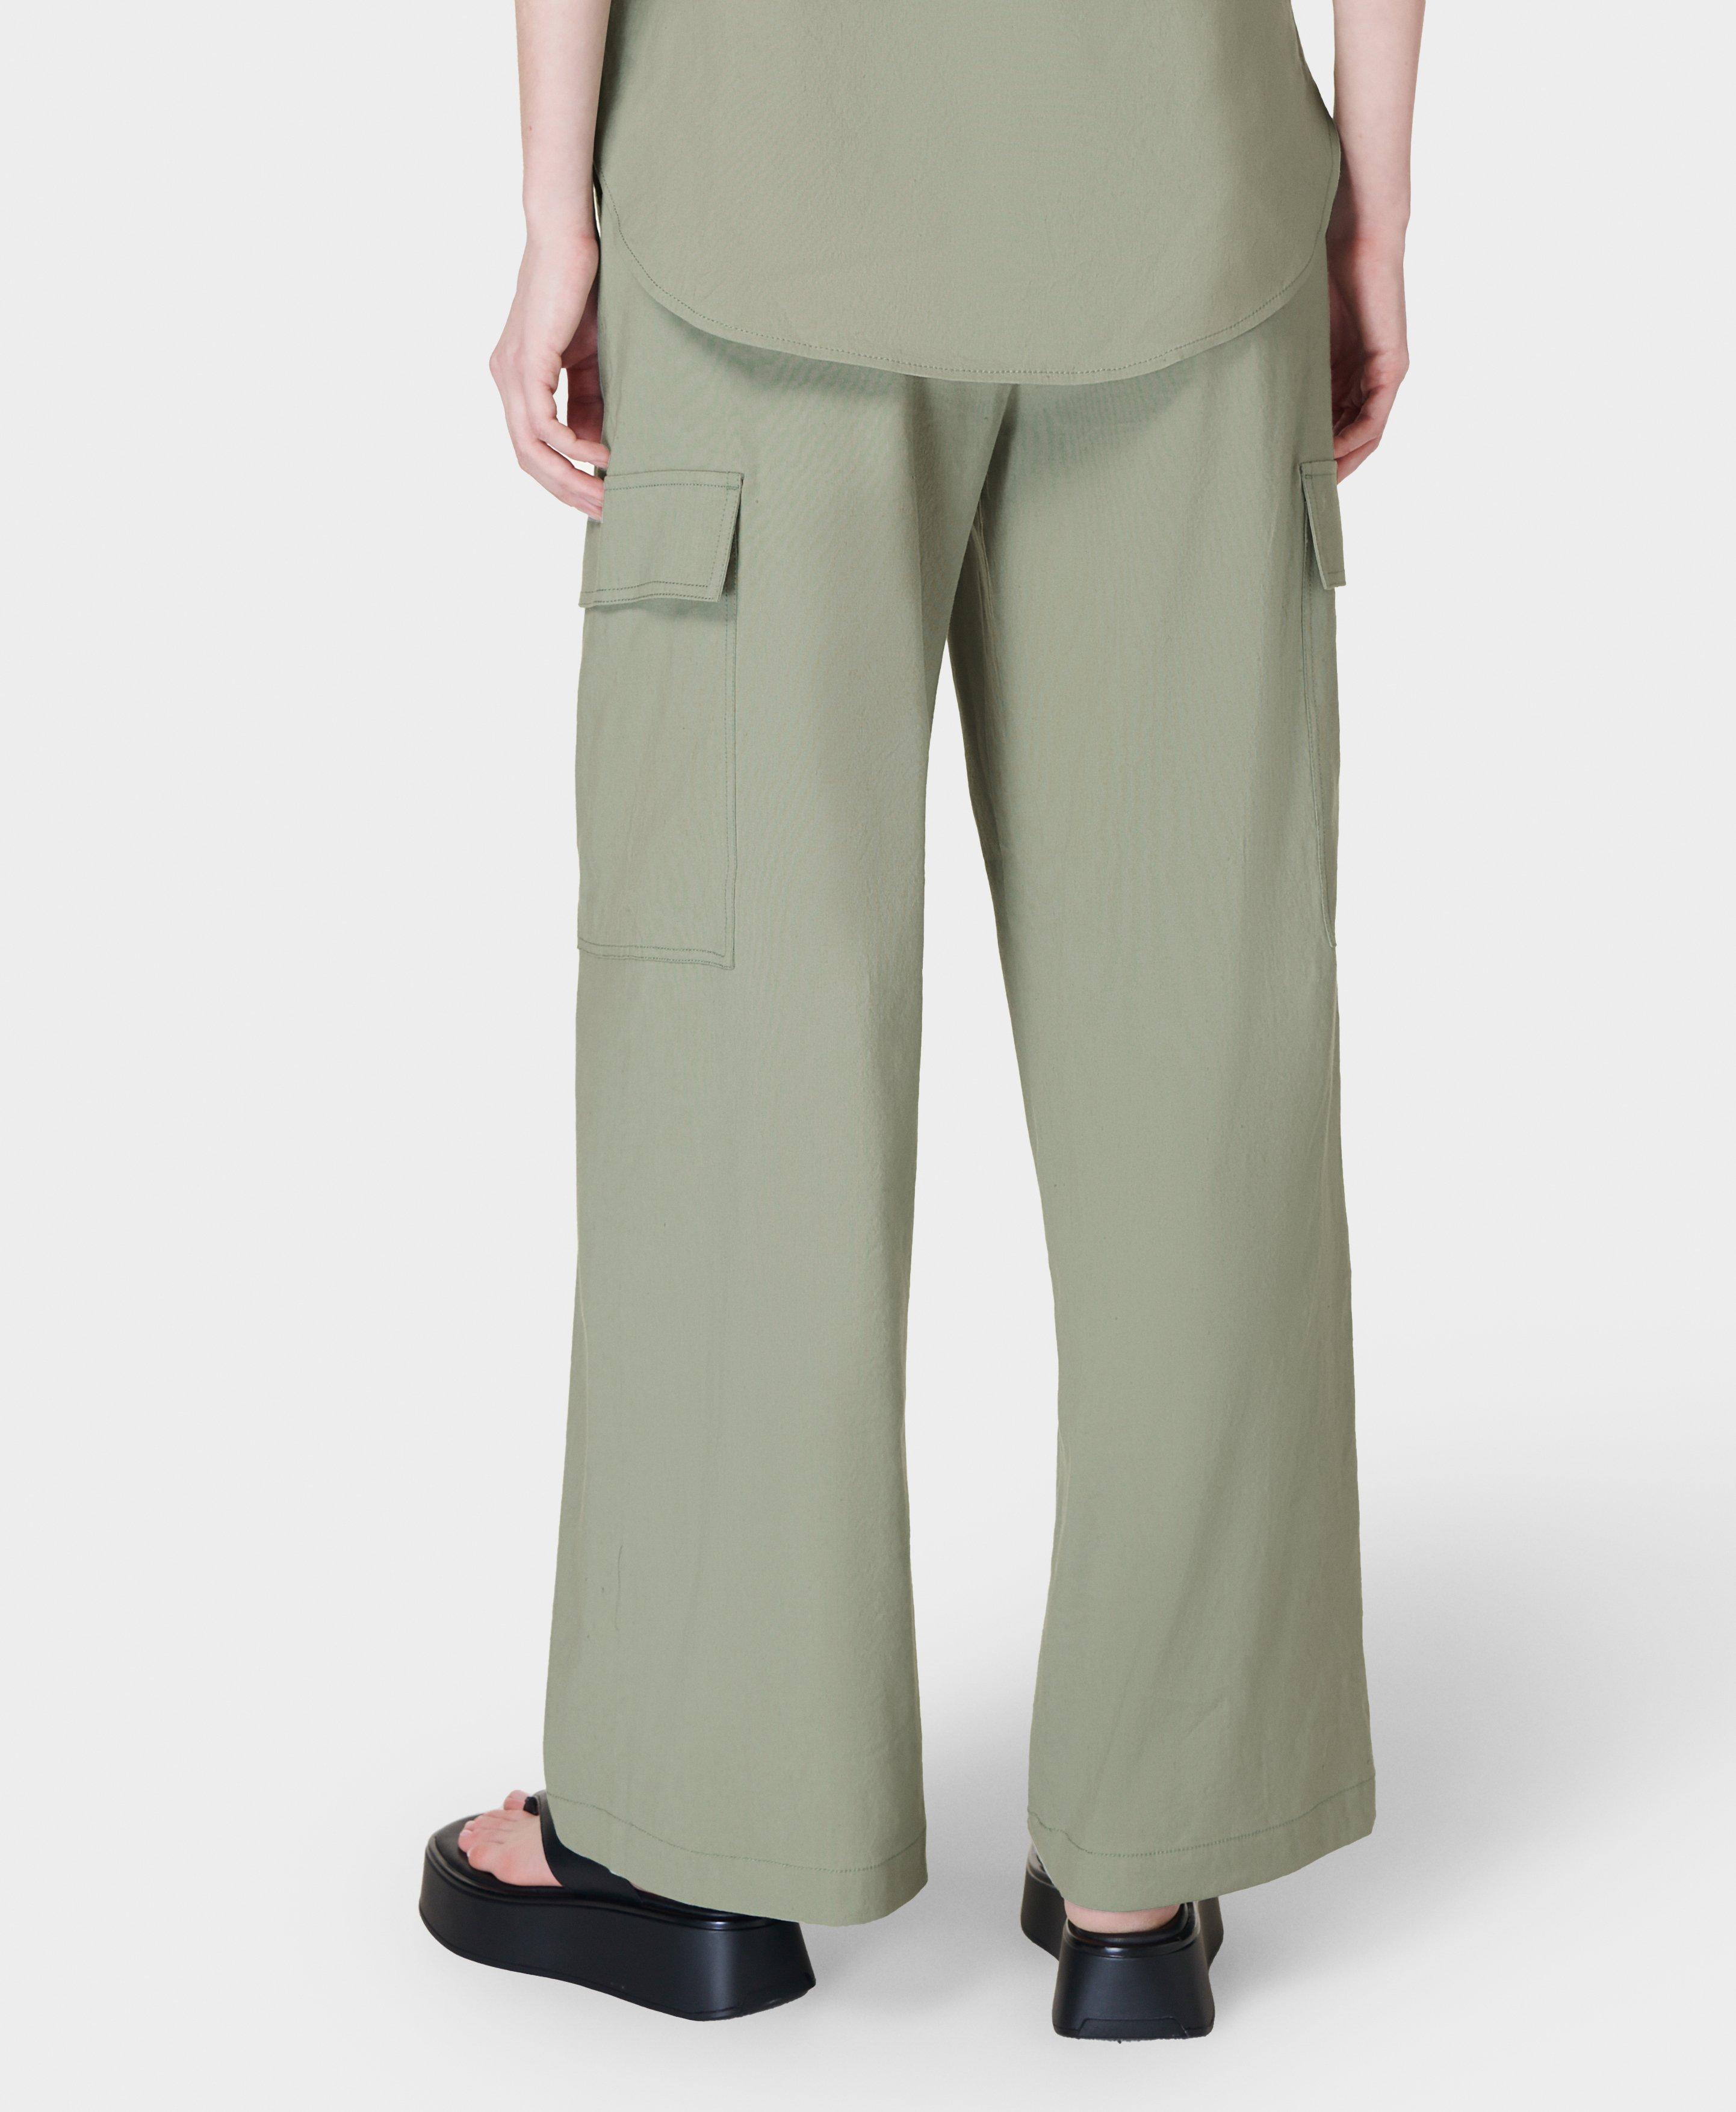 Women's Cargo Pants, Women's Utility Pants